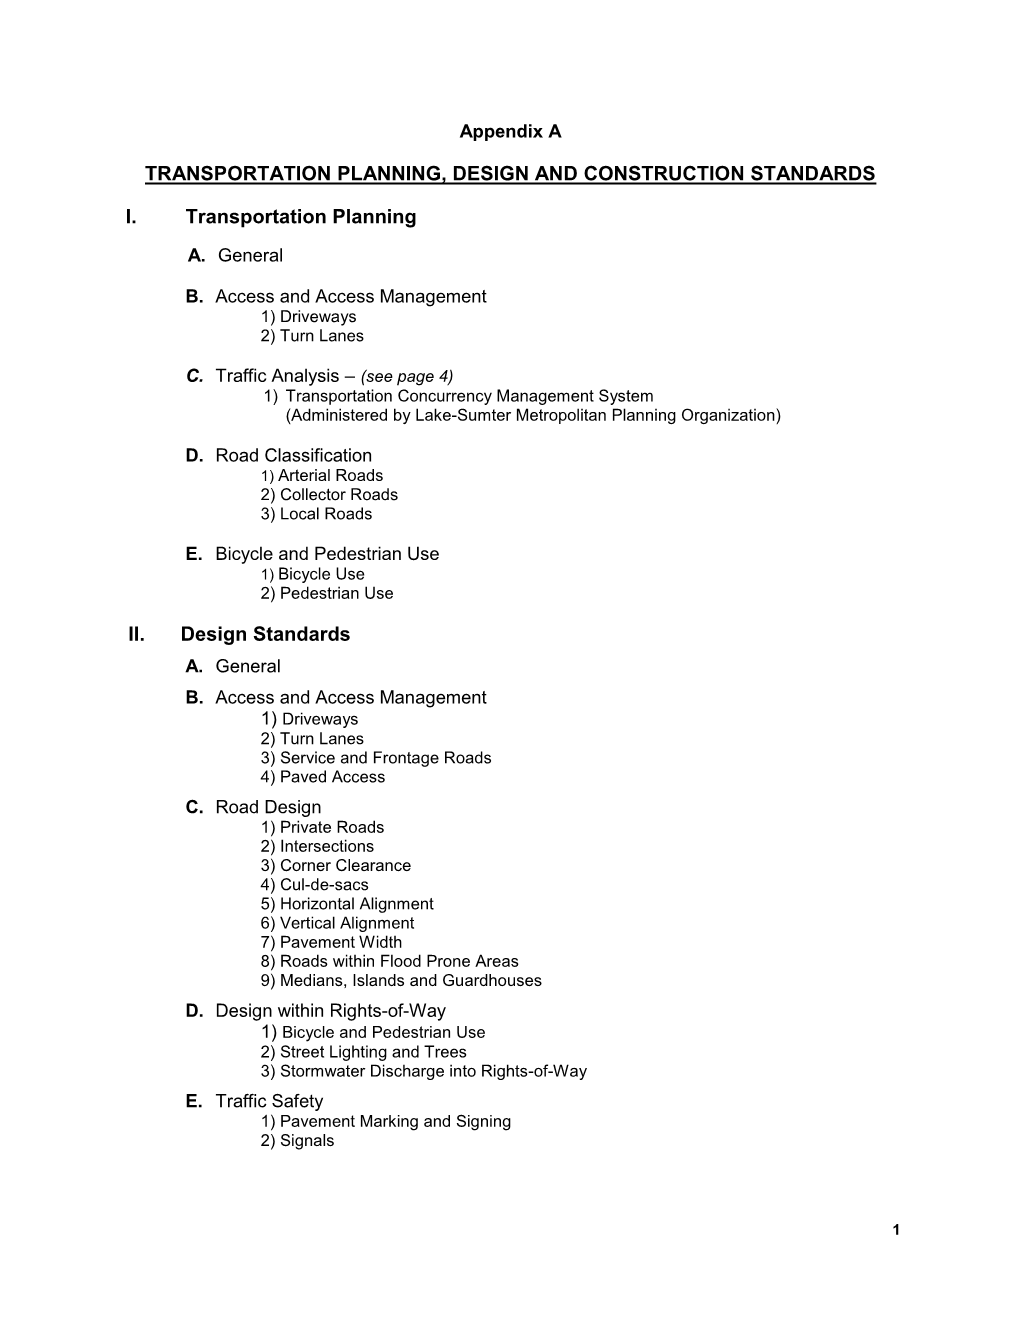 Appendix a – Transportation Planning, Design and Construction Standards